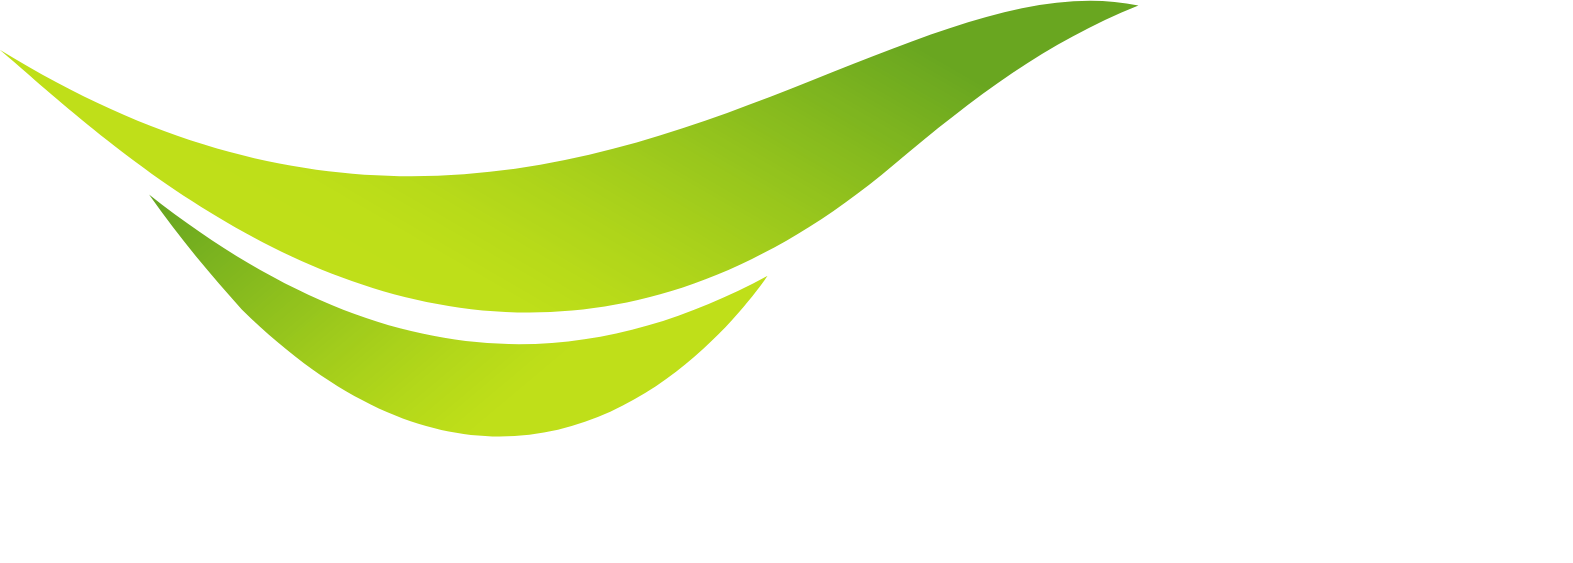 Advanced Info Service (AIS) Logo groß für dunkle Hintergründe (transparentes PNG)